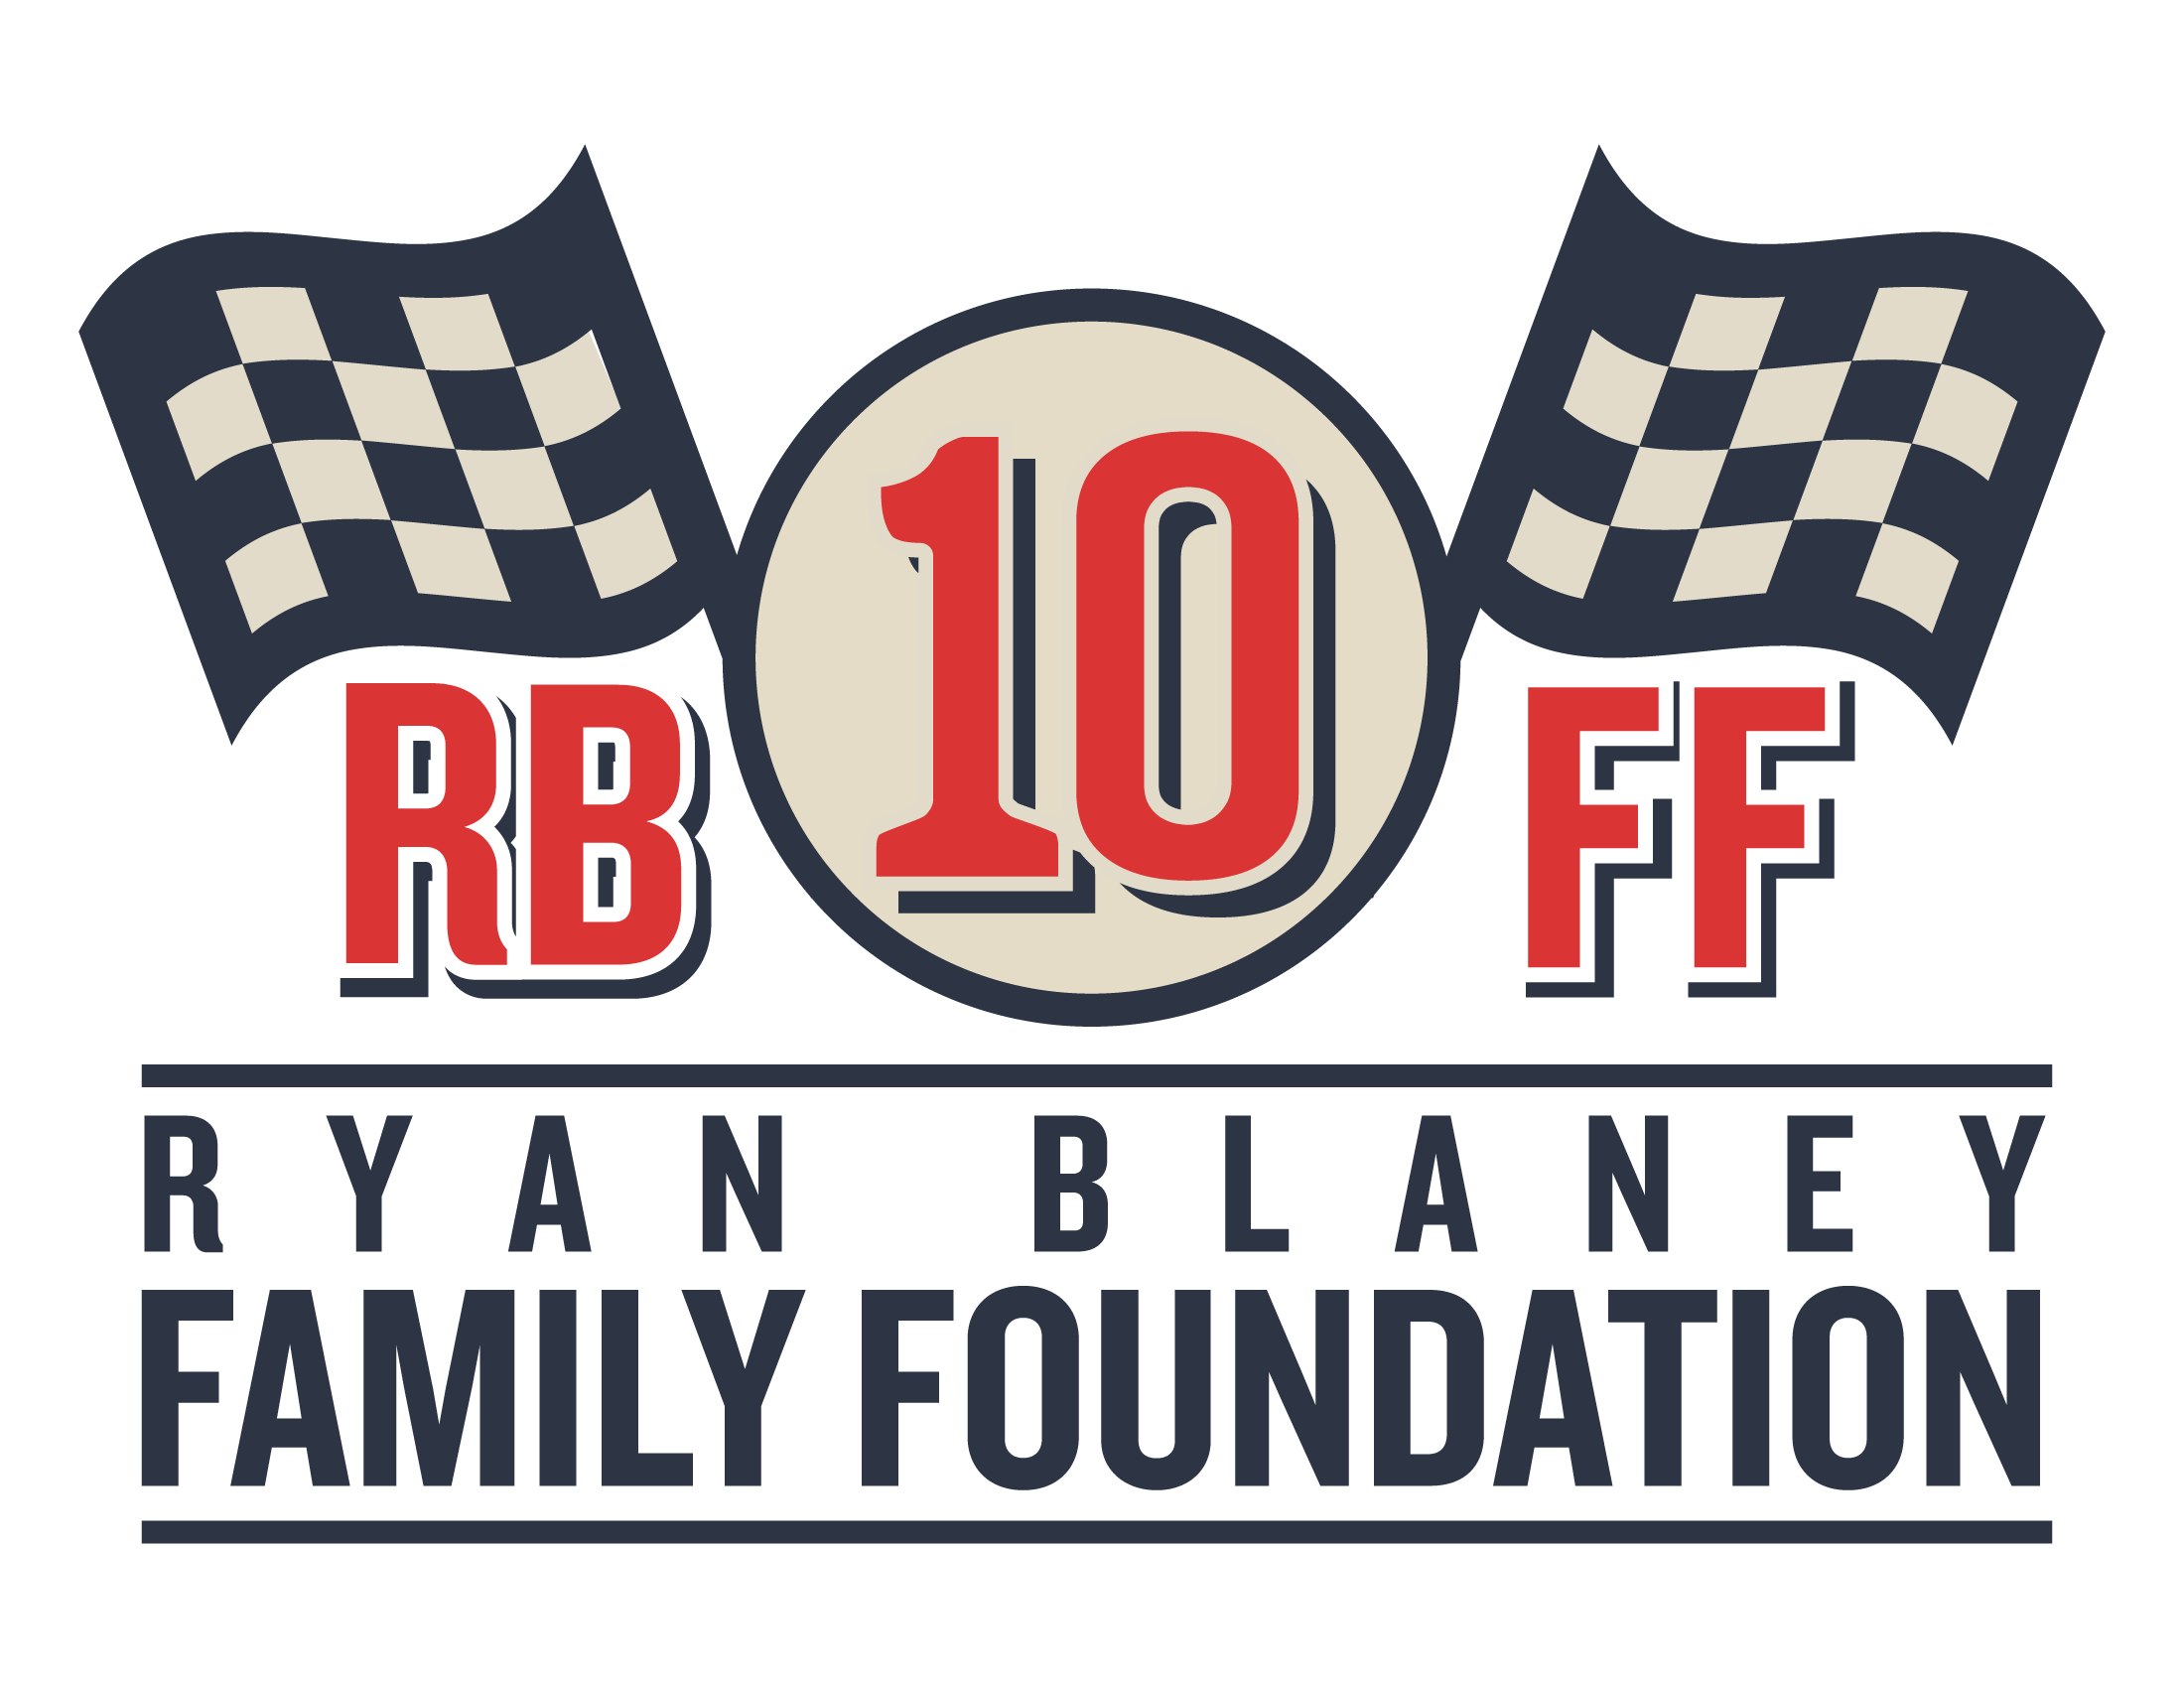 Ryan Blaney Family Foundation (Tier 2)